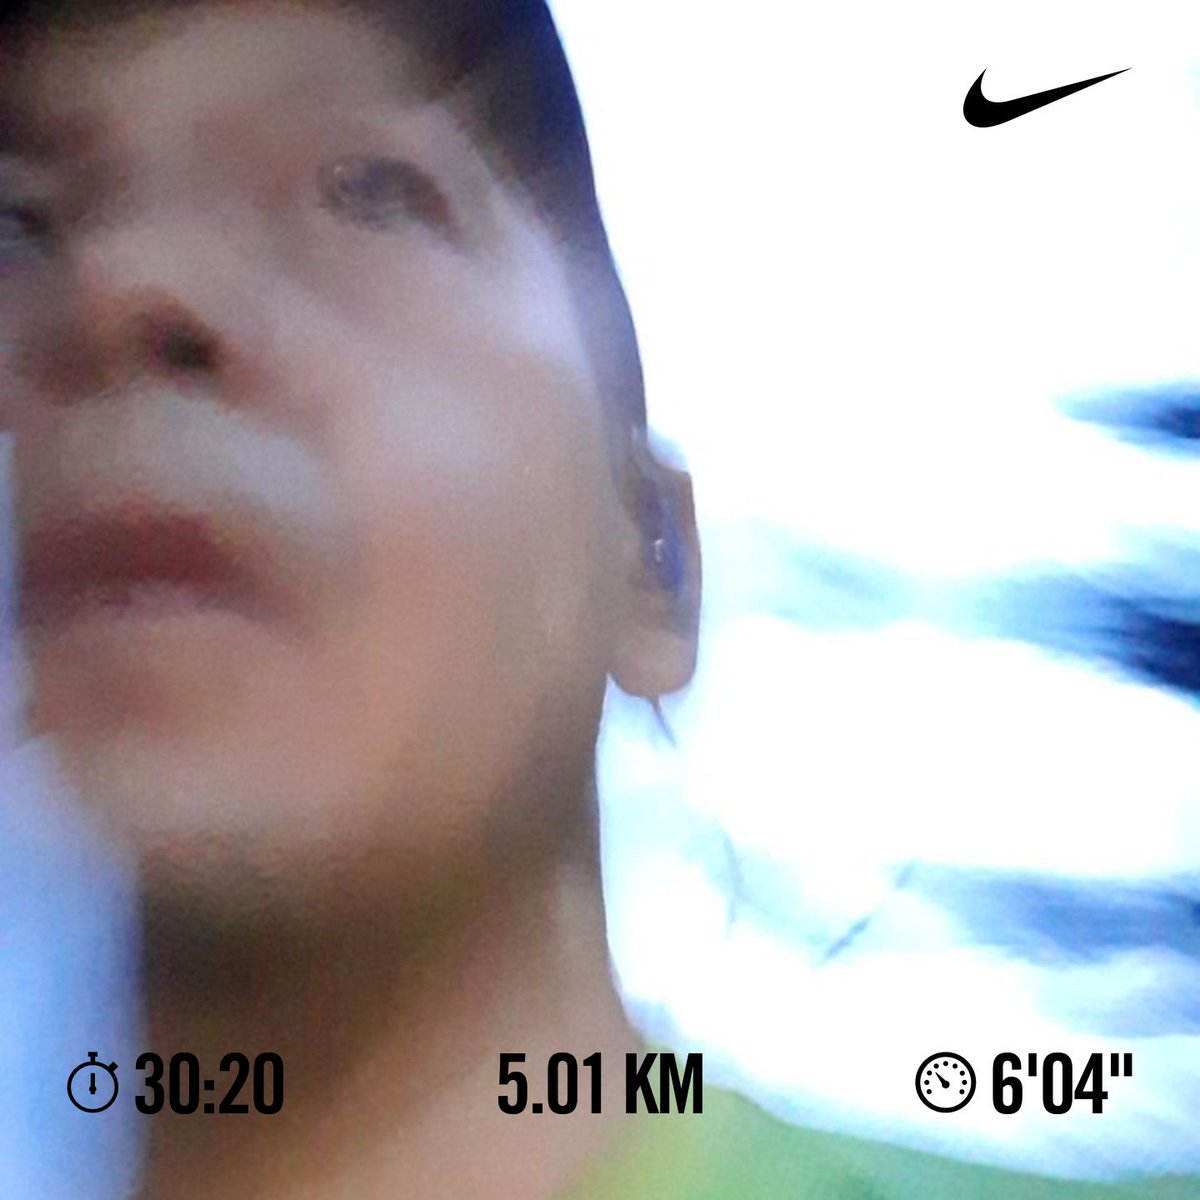 wednesday afternoon run
5,01k
30:20
6'04'
#nike #nikerun #nikerunning #nikerunclub #nikerunner #nrc #run #running #runner #runners #morningrun #5k #5krun #run5k #lari #laripagi #larisore #laridarikenyataan #strava #pace #paceseadanya #pacealakadarnya #seginijugauyuhan